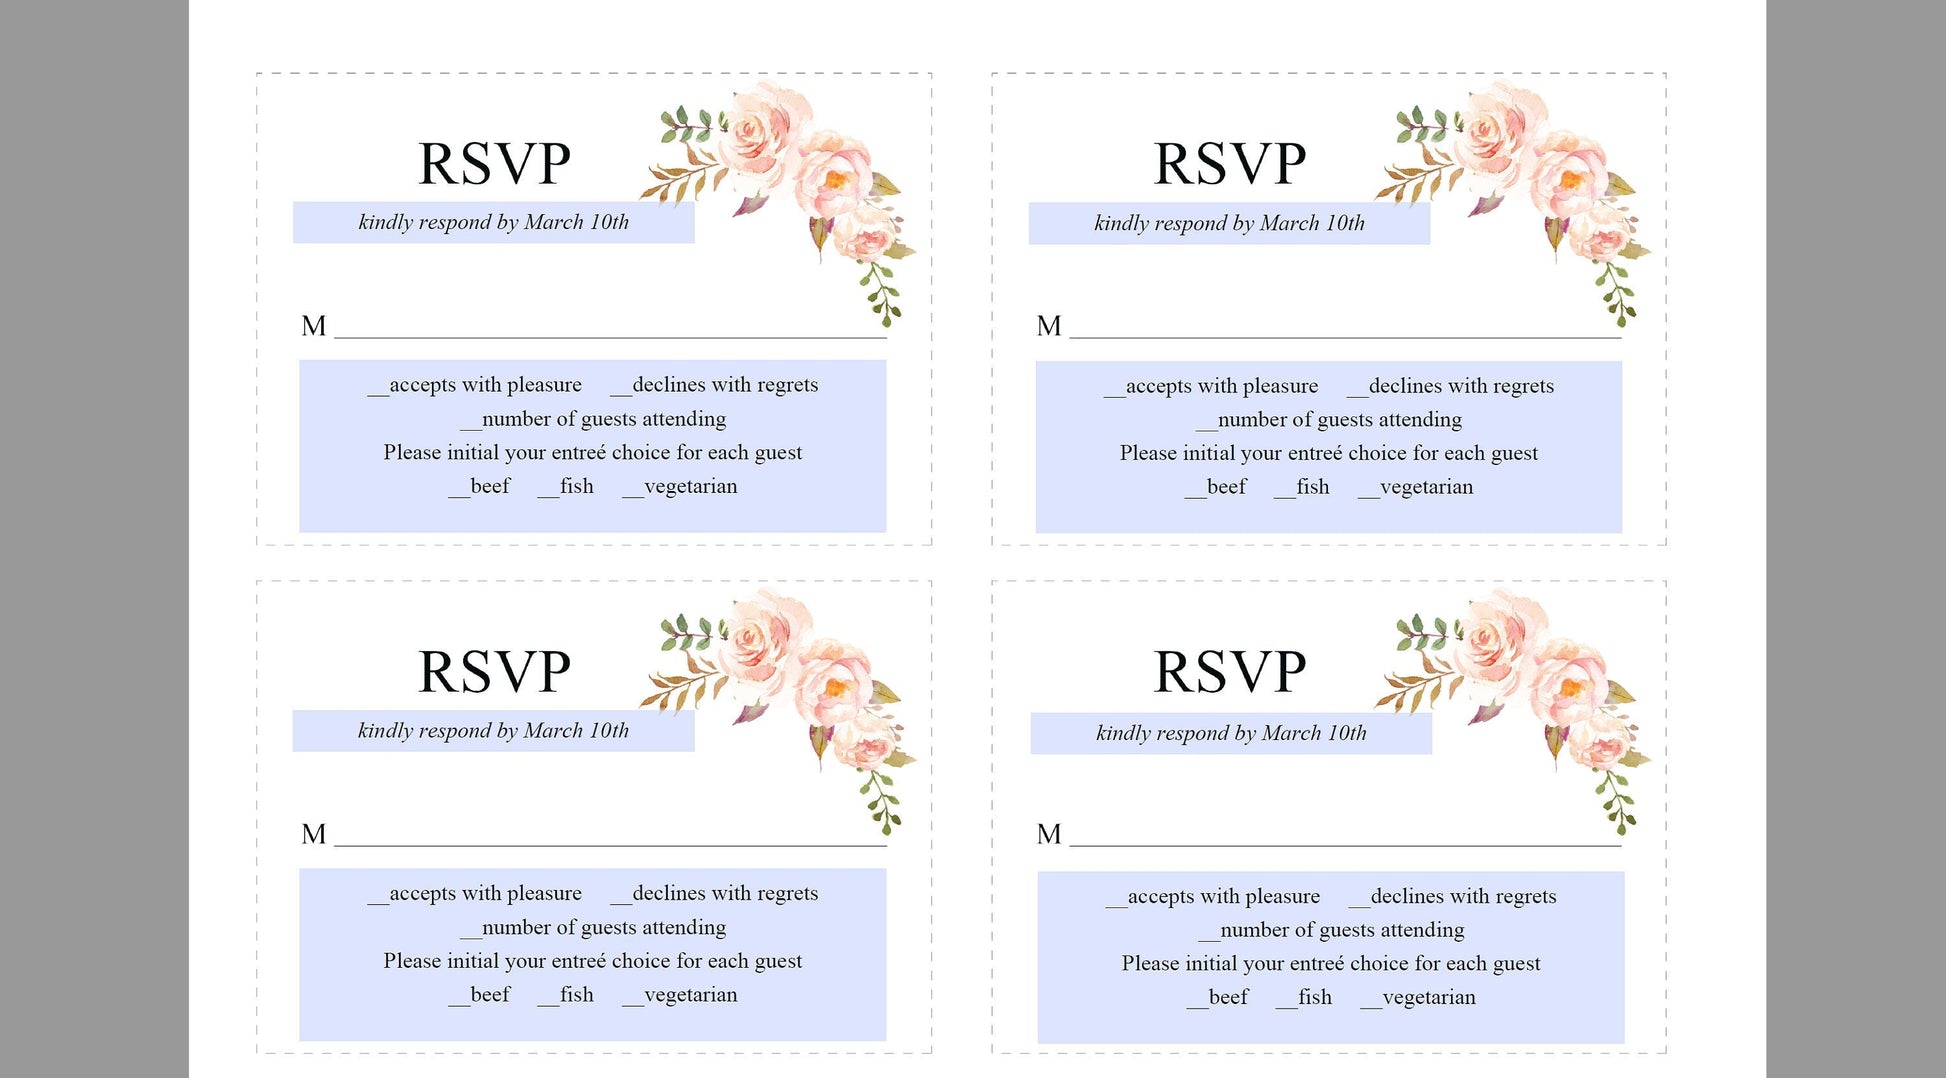 Printable Blush Floral Wedding Invitation Set Editable Template, DIY Instant Download Invites, Invitation Suite- Katherine WEDDING INVITATION SETS SAVVY PAPER CO